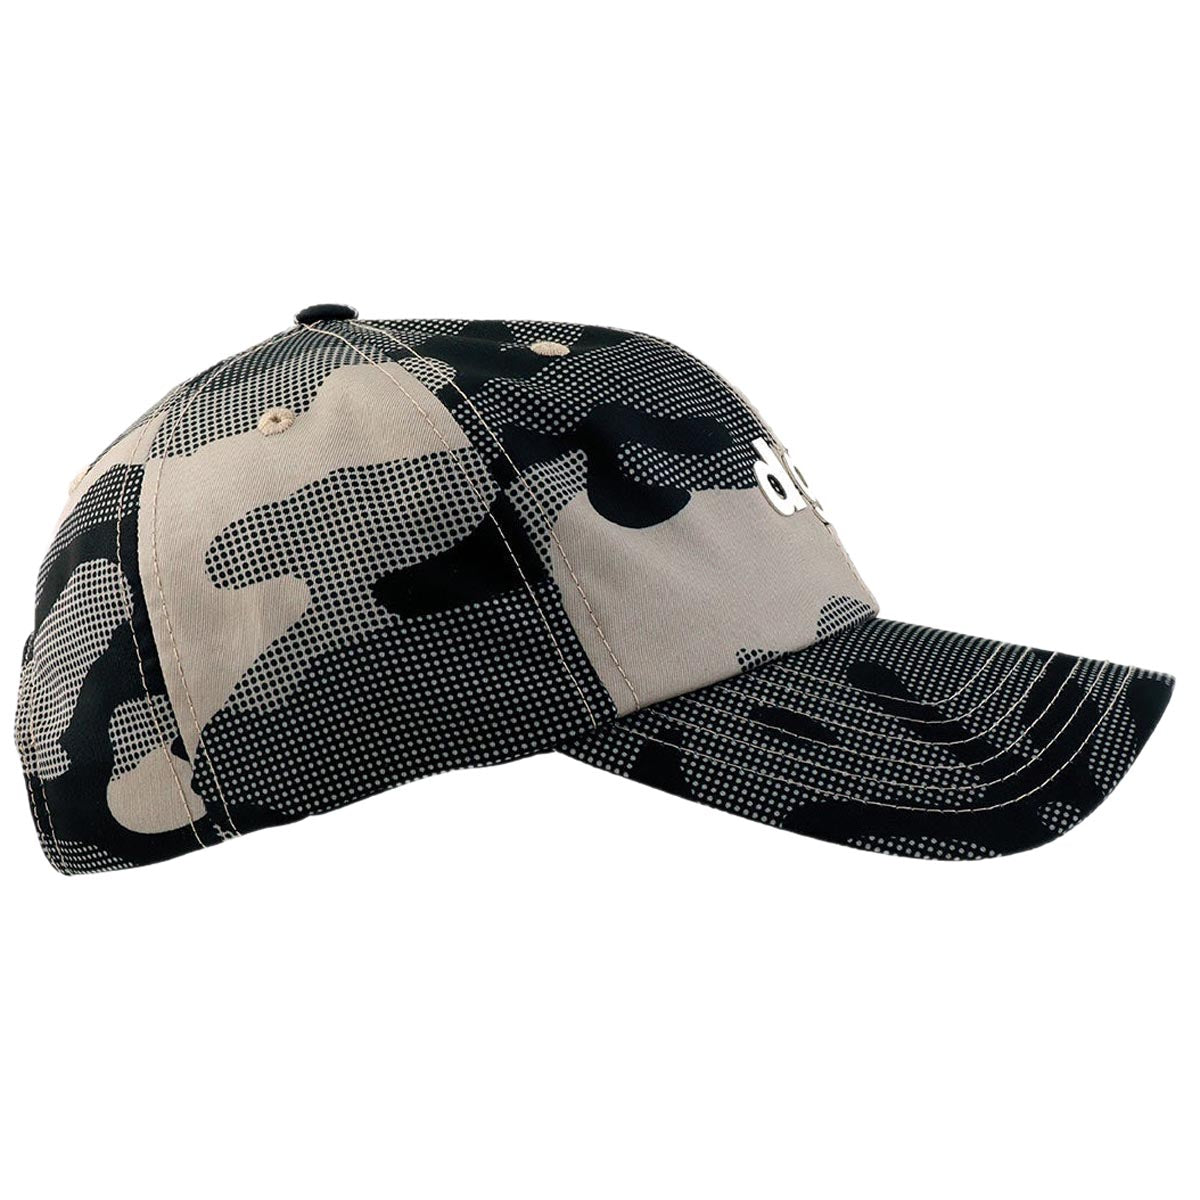 DGK Contra Strapback Hat - Black Camo image 3